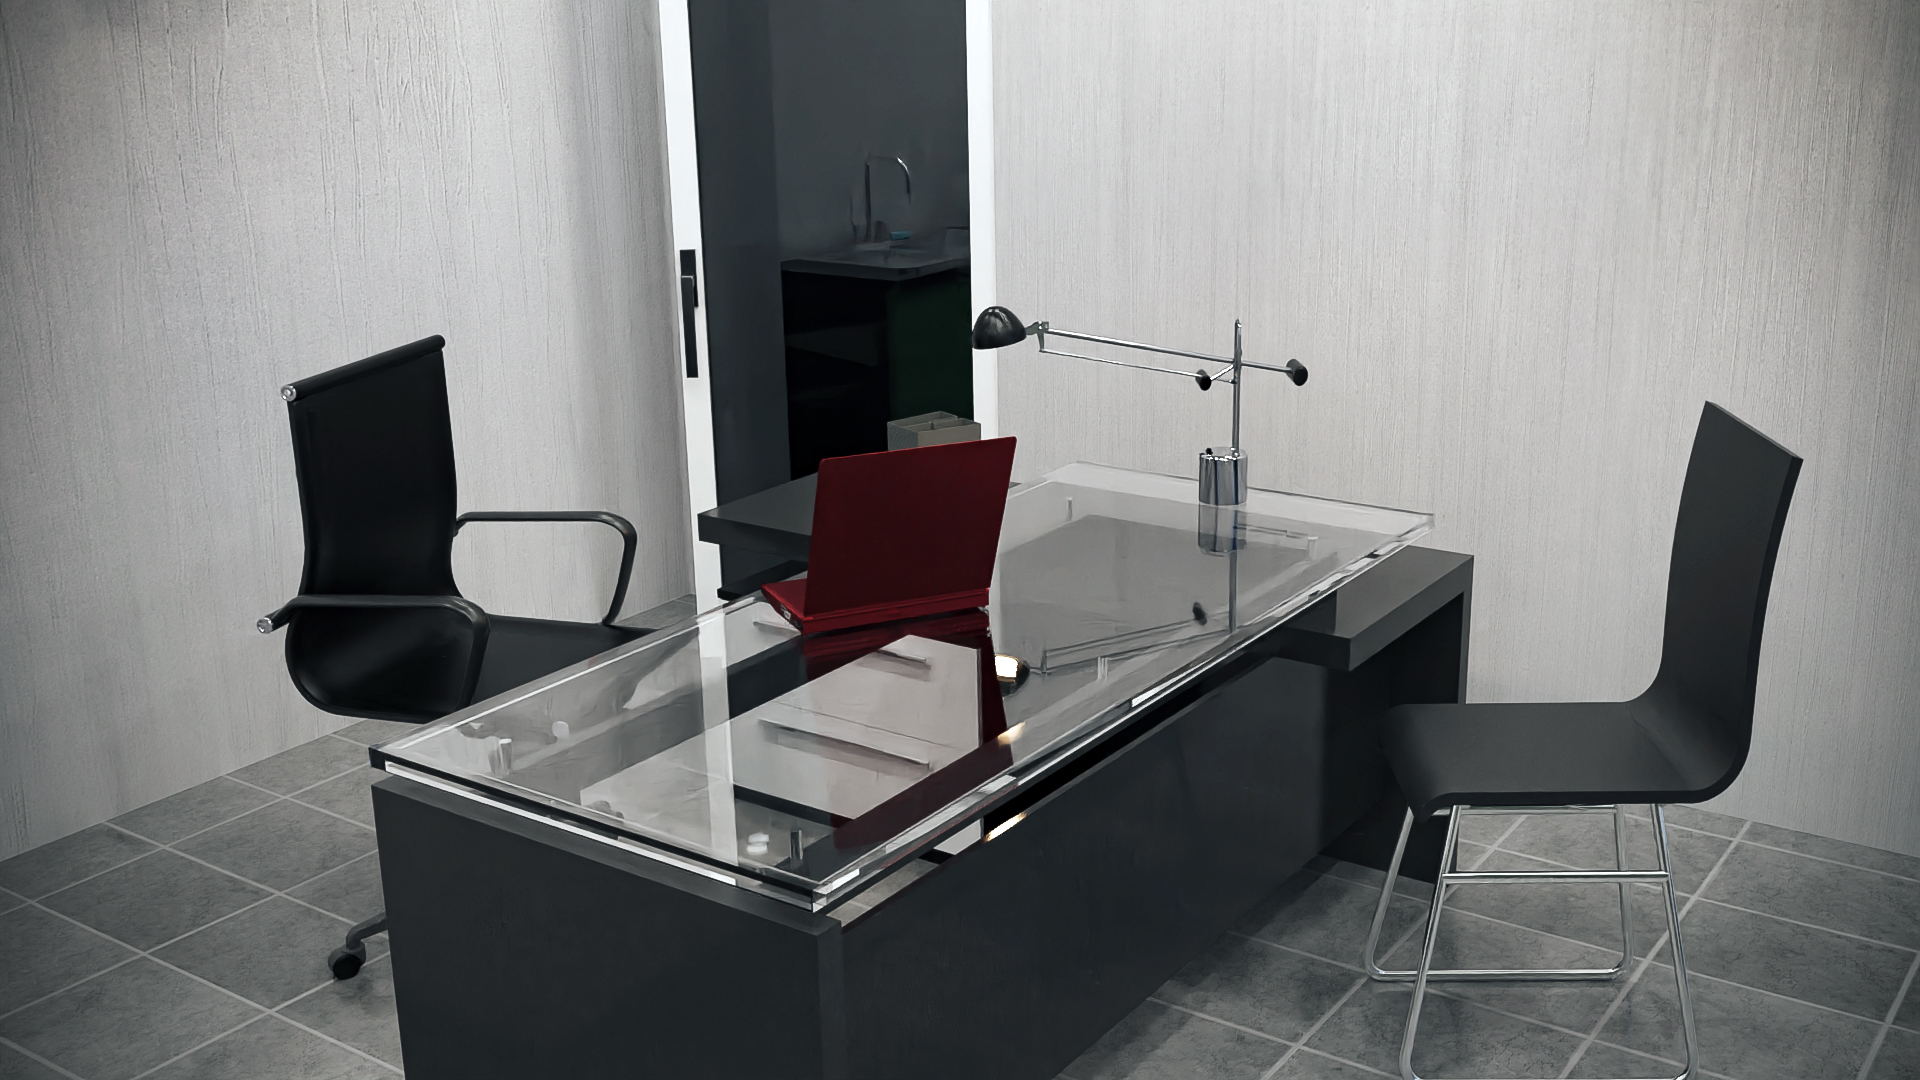 Ambulatory Care Department by: Tesla3dCorp, 3D Models by Daz 3D